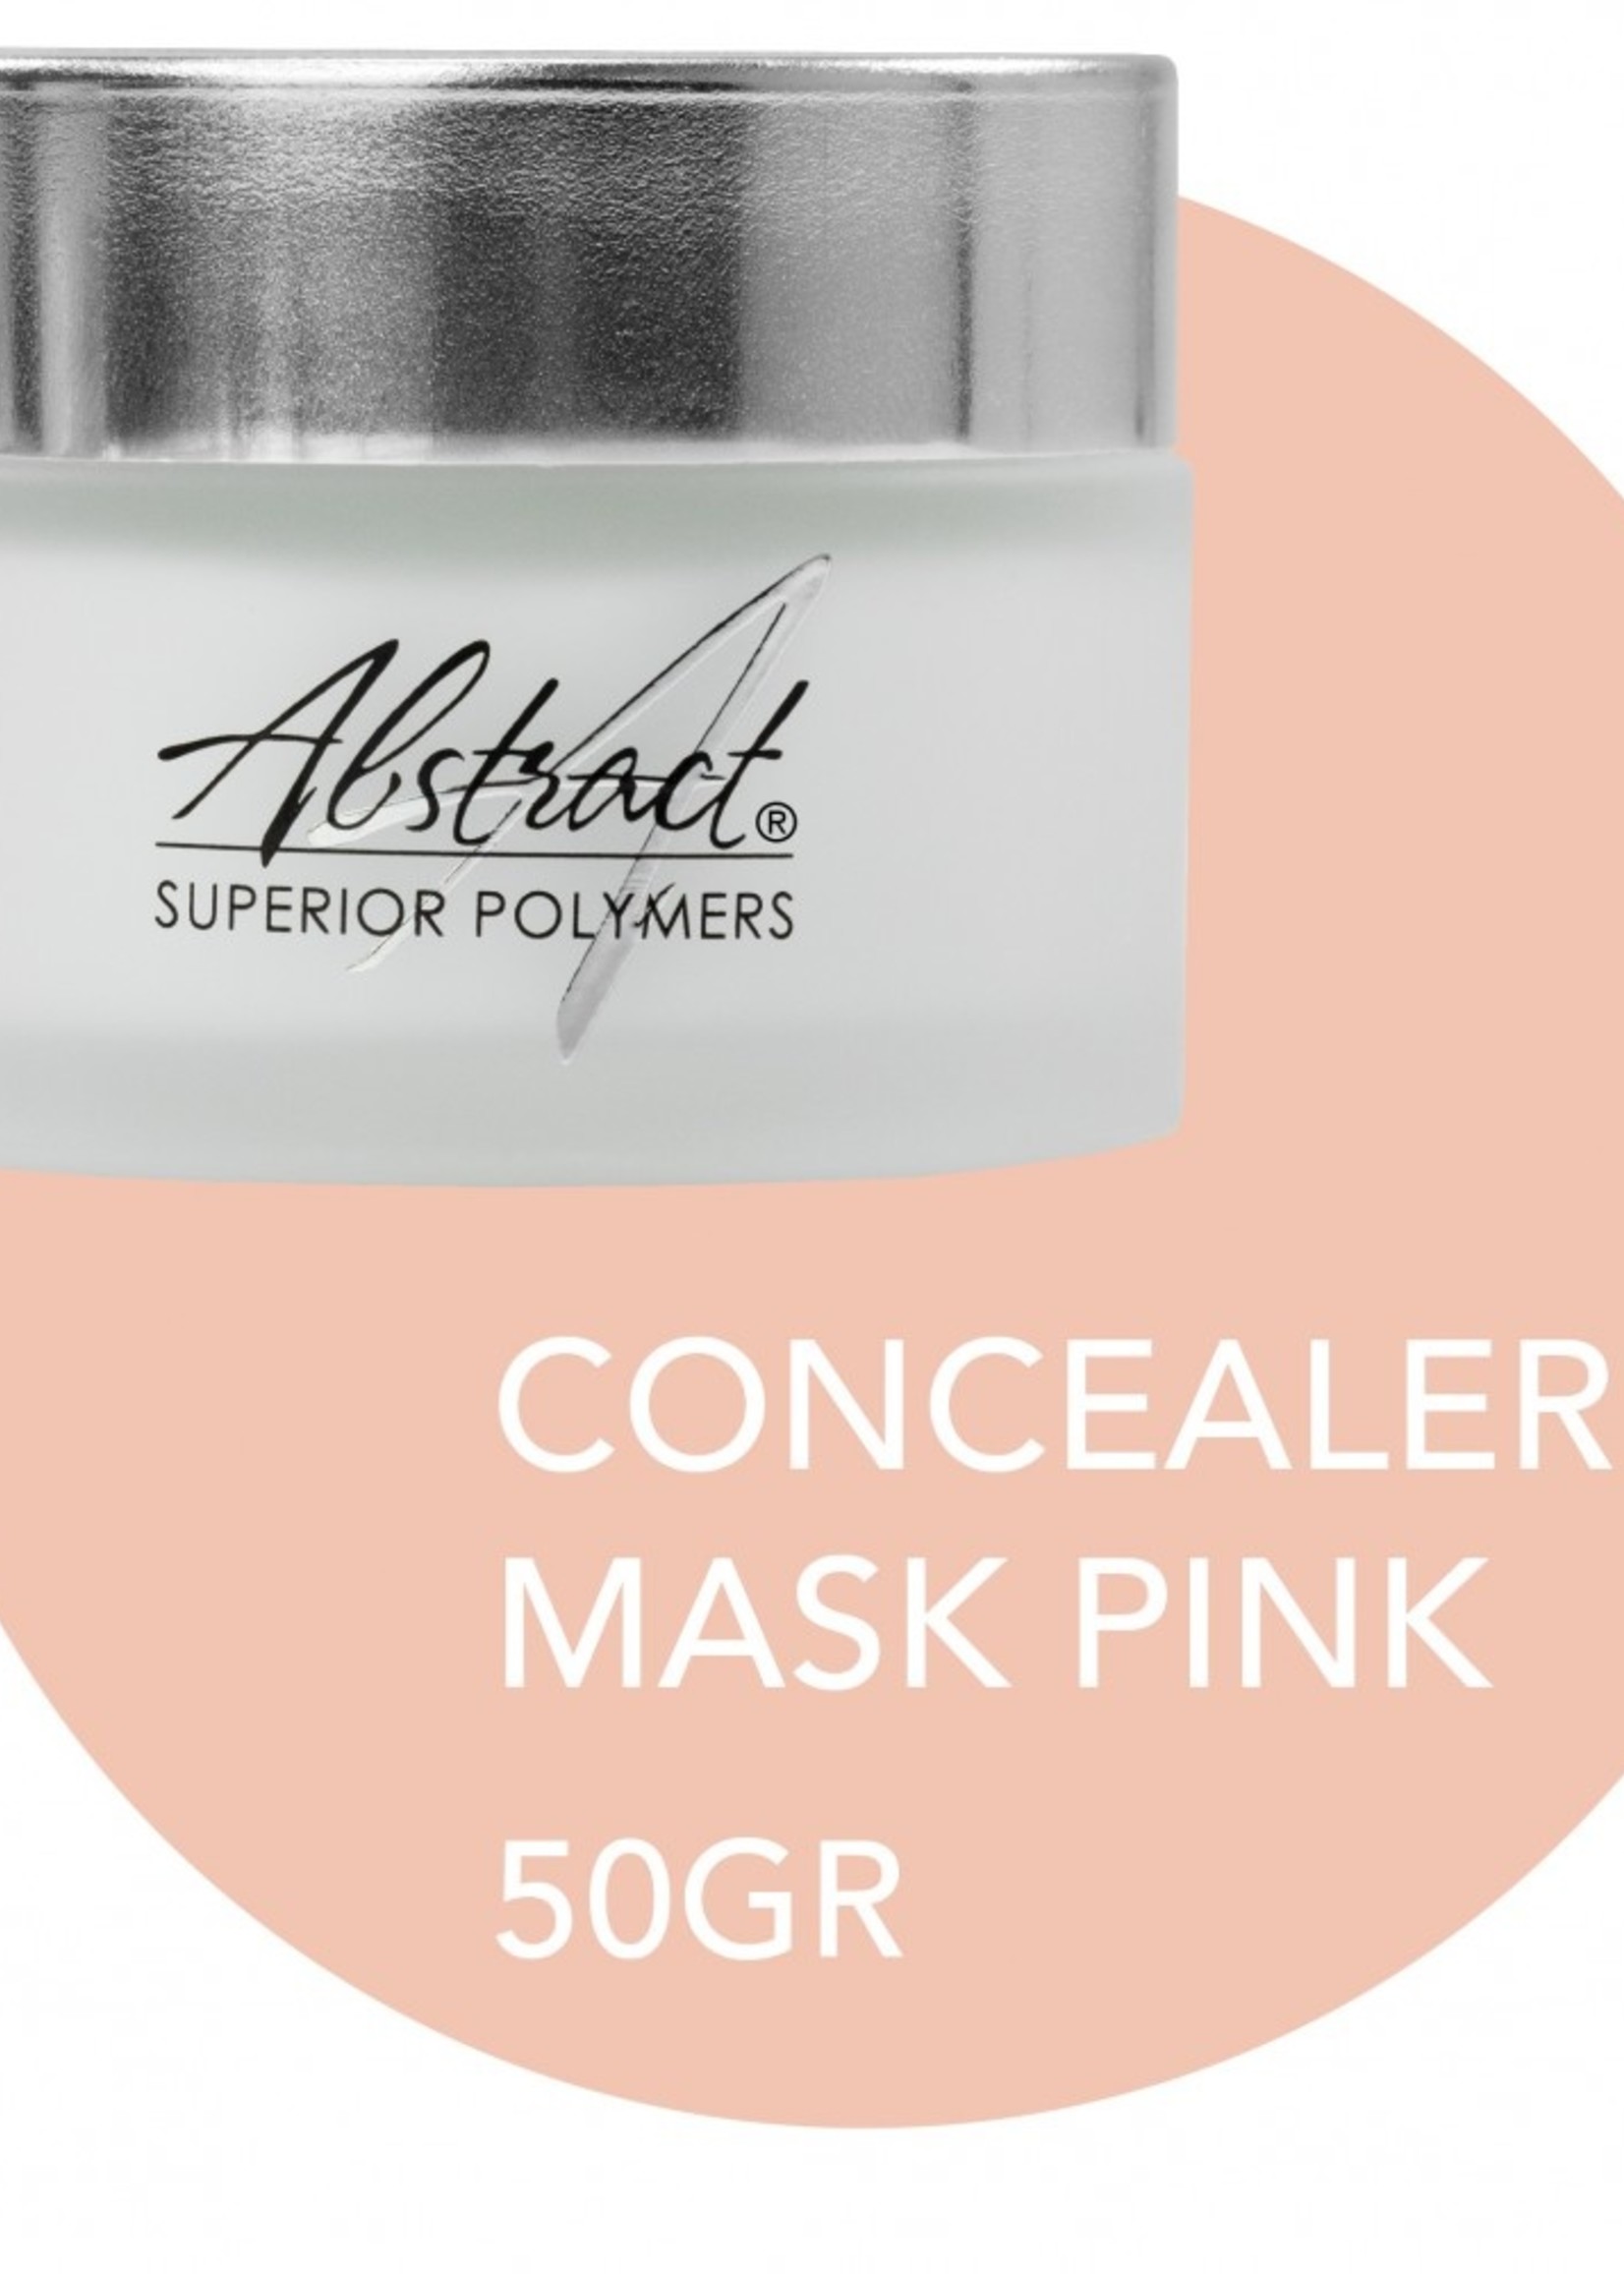 Abstract® Superior Polymer Concealer Mask pink 50 gr